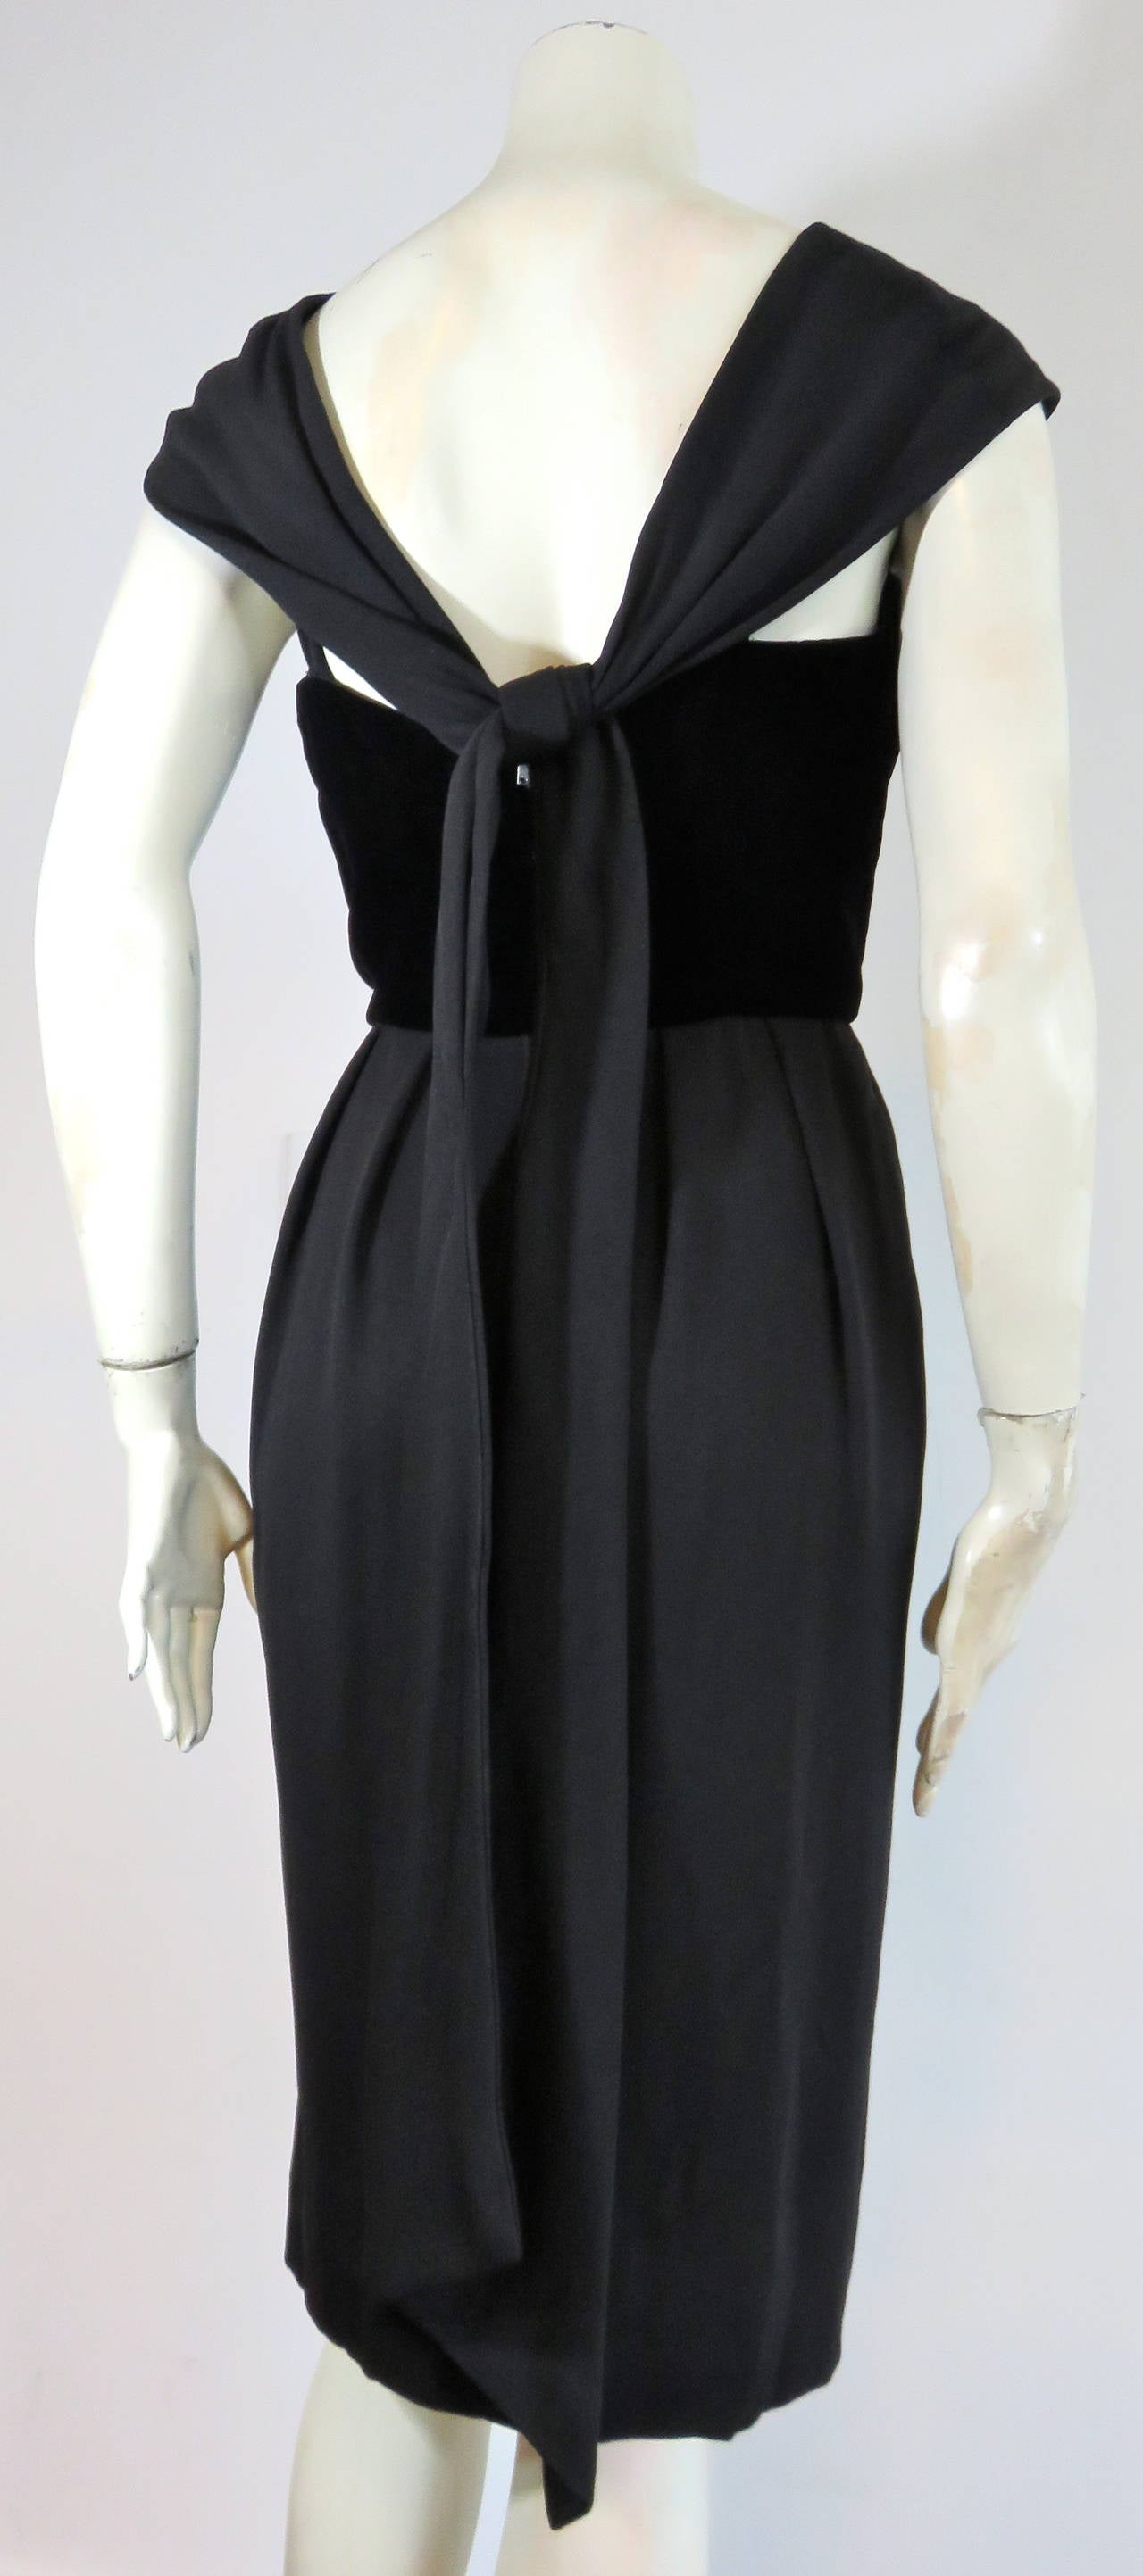 Stunning, 1960's LUIS ESTEVEZ black, crepe & velvet cocktail dress.

Plush, black velvet top bodice with draped detailing at shoulders, and long, sash detail at rear.

Front slit detail at bottom hem.

Concealed, center-back zipper